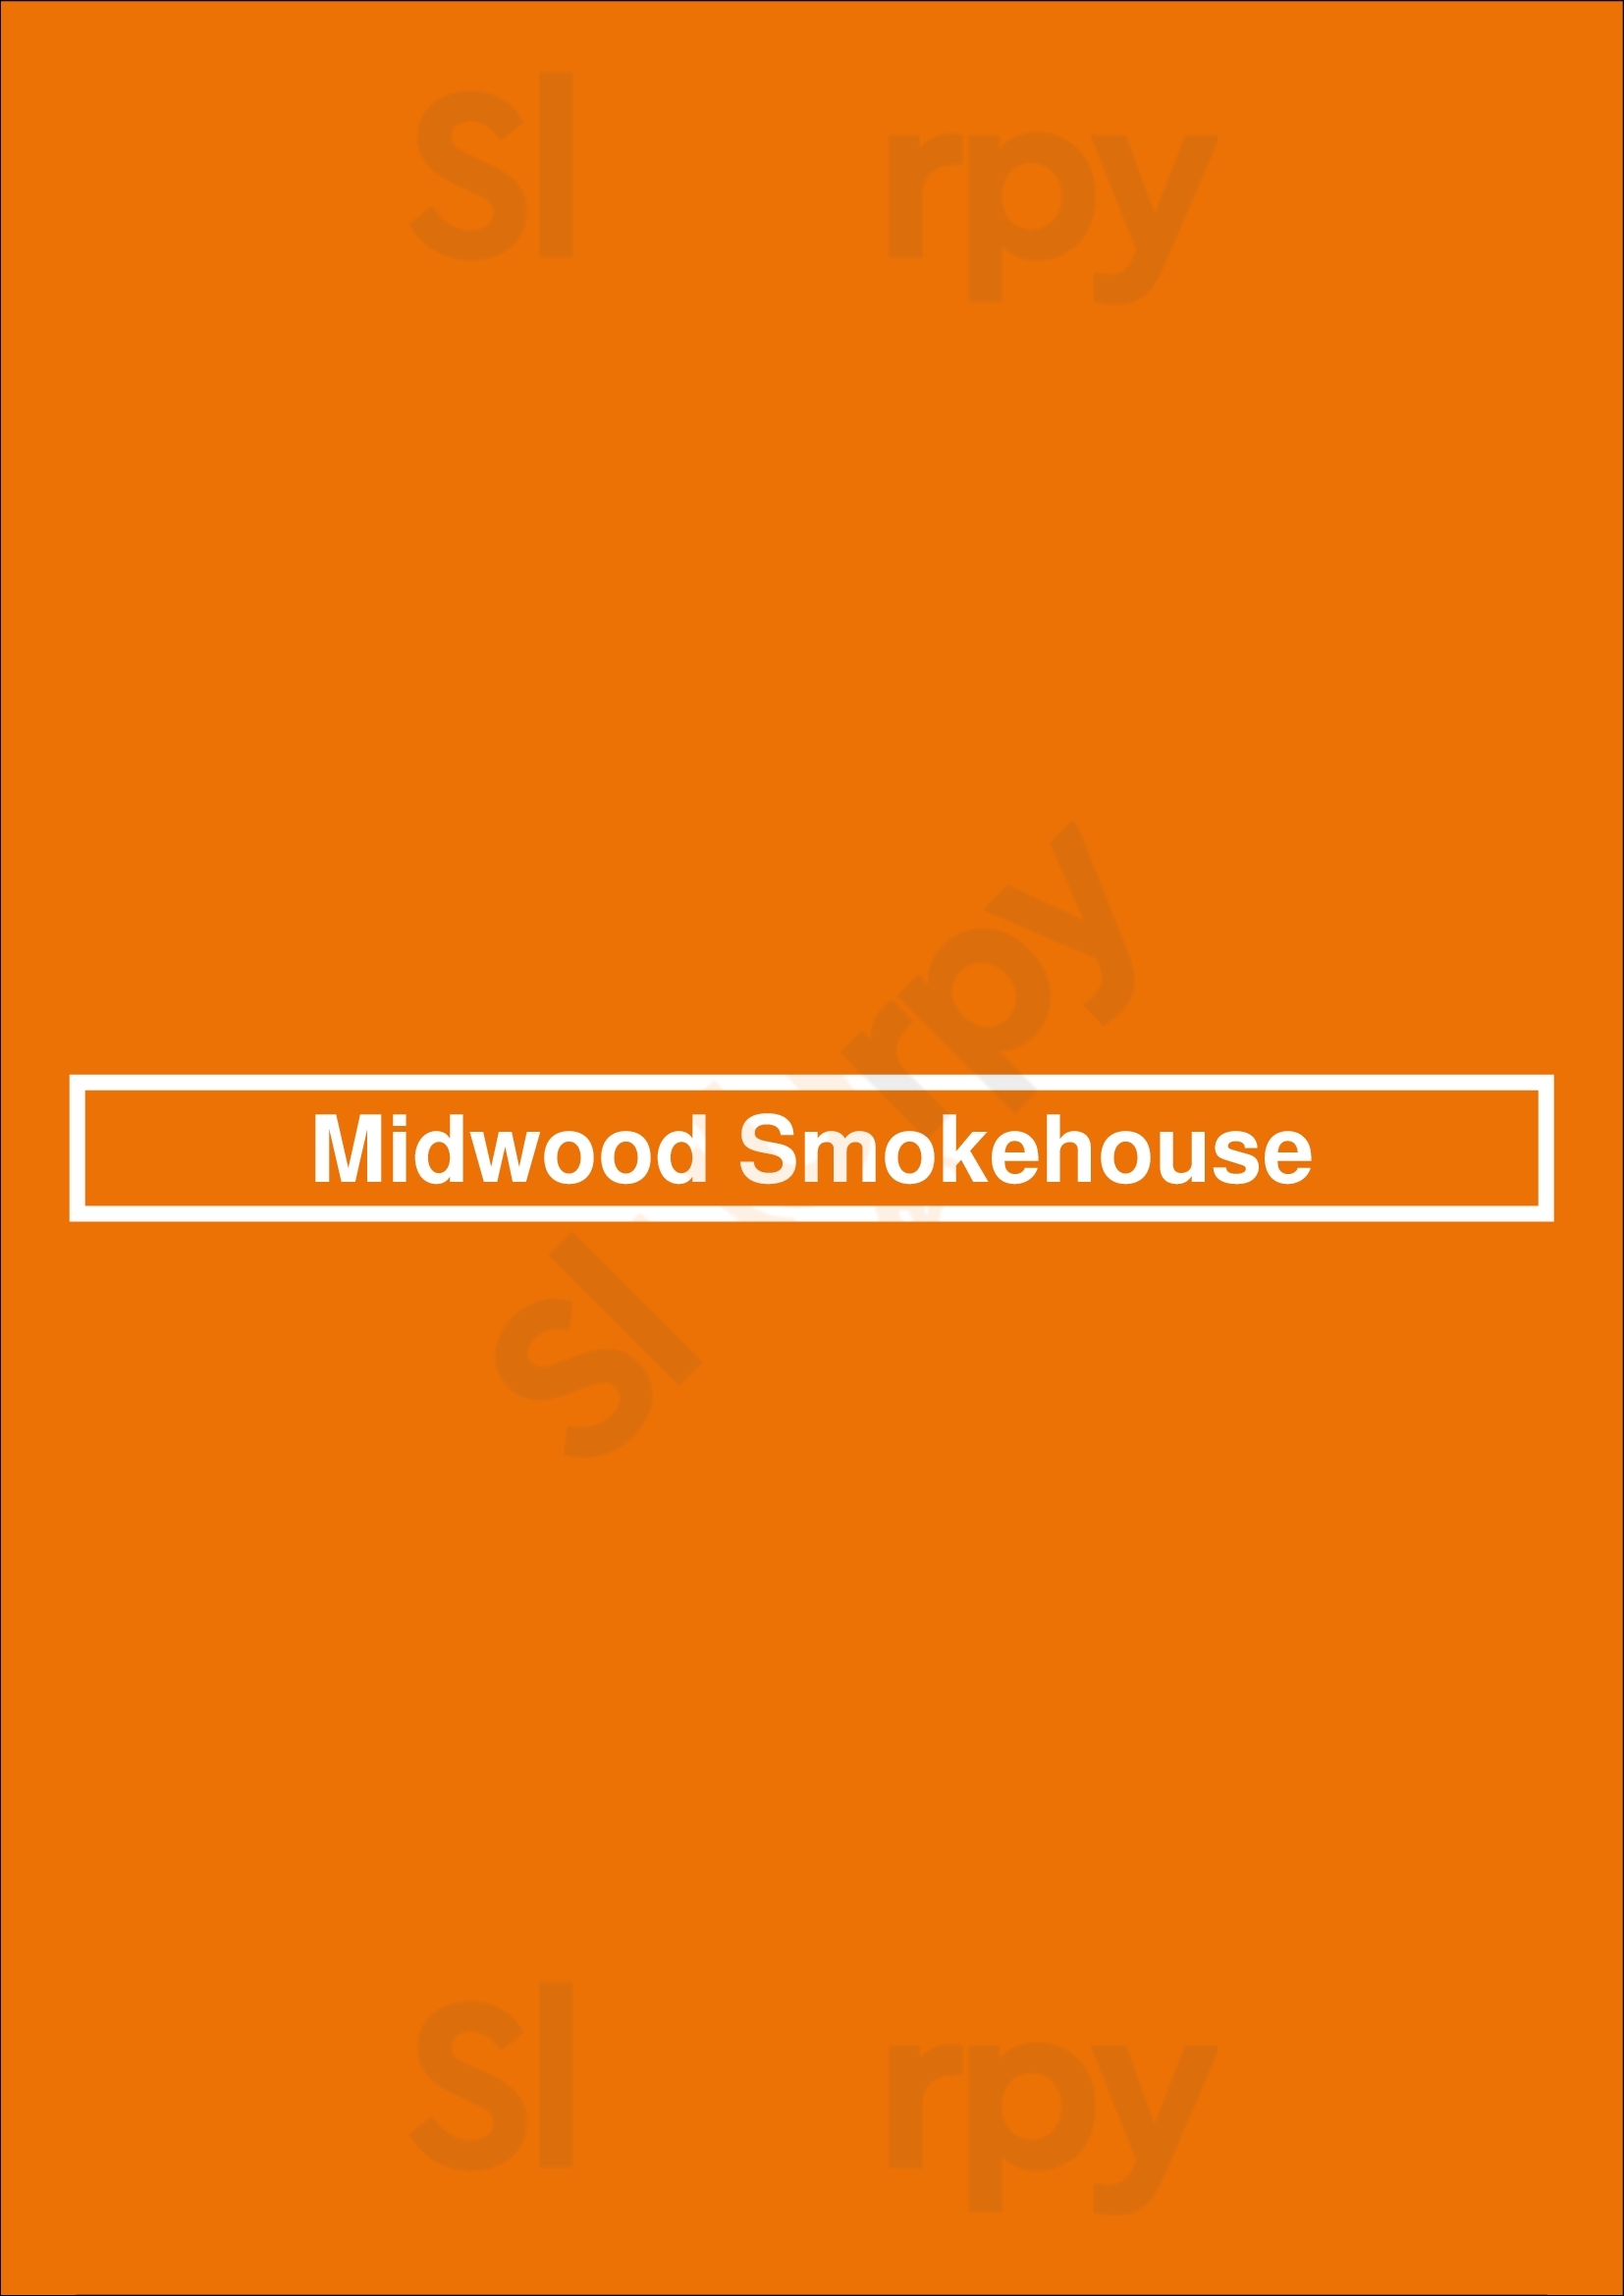 Midwood Smokehouse Charlotte Menu - 1